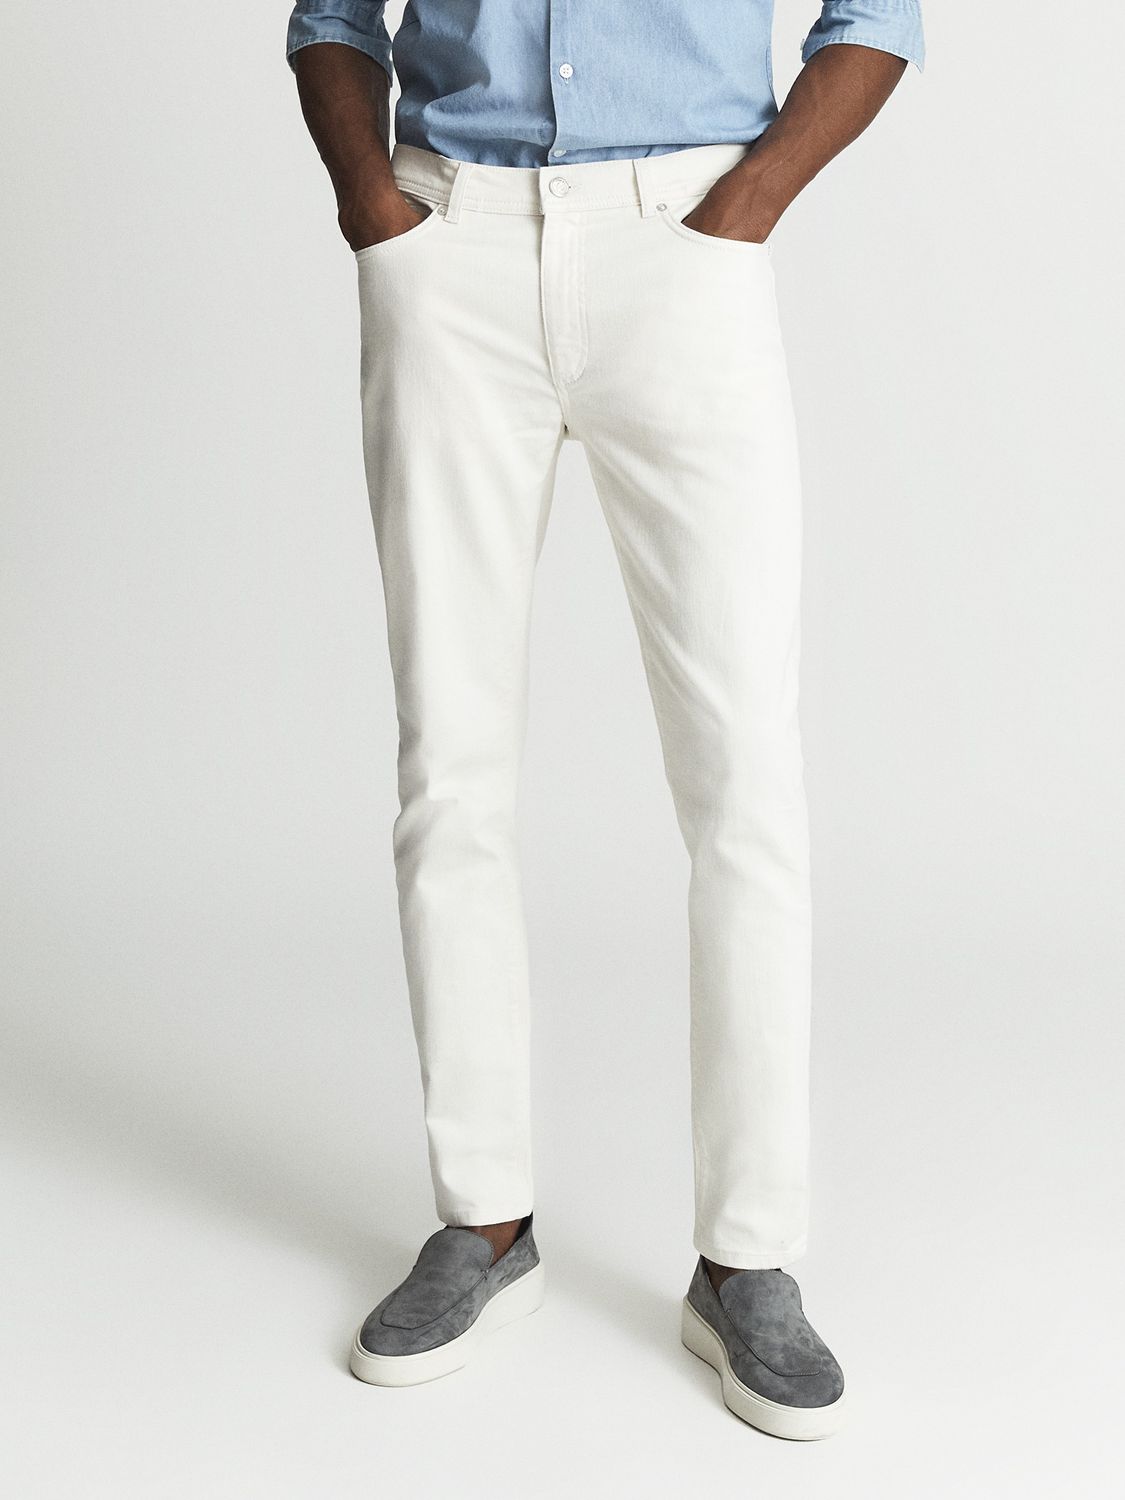 Reiss Santorini Slim Fit Jeans, Ecru at John Lewis & Partners